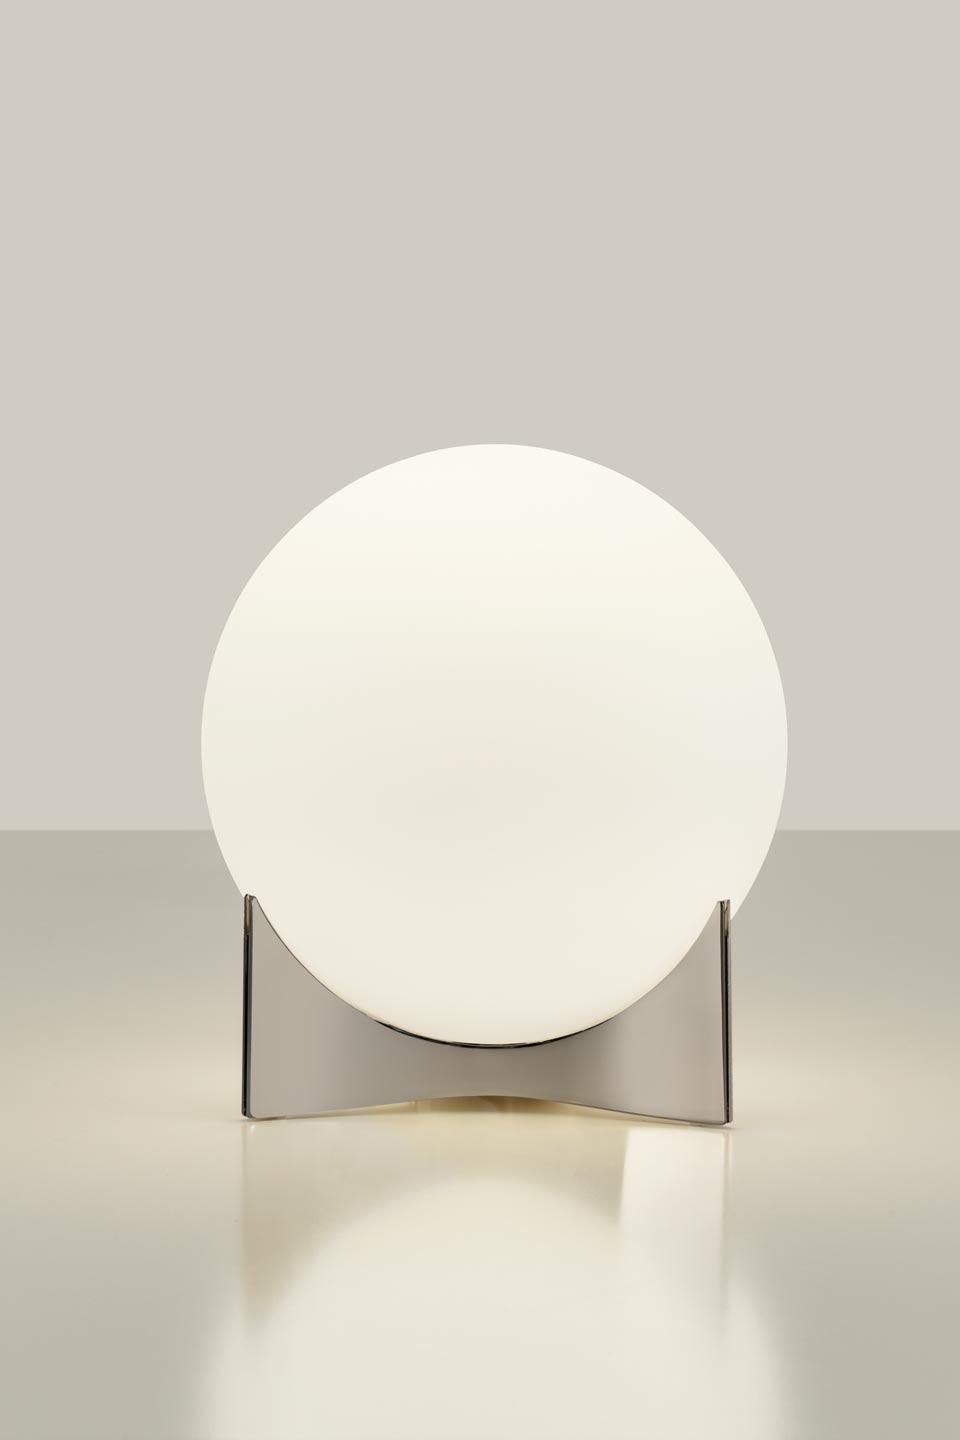 Oscar lampe de table globe en verre blanc et socle nickel brossé. Terzani. 